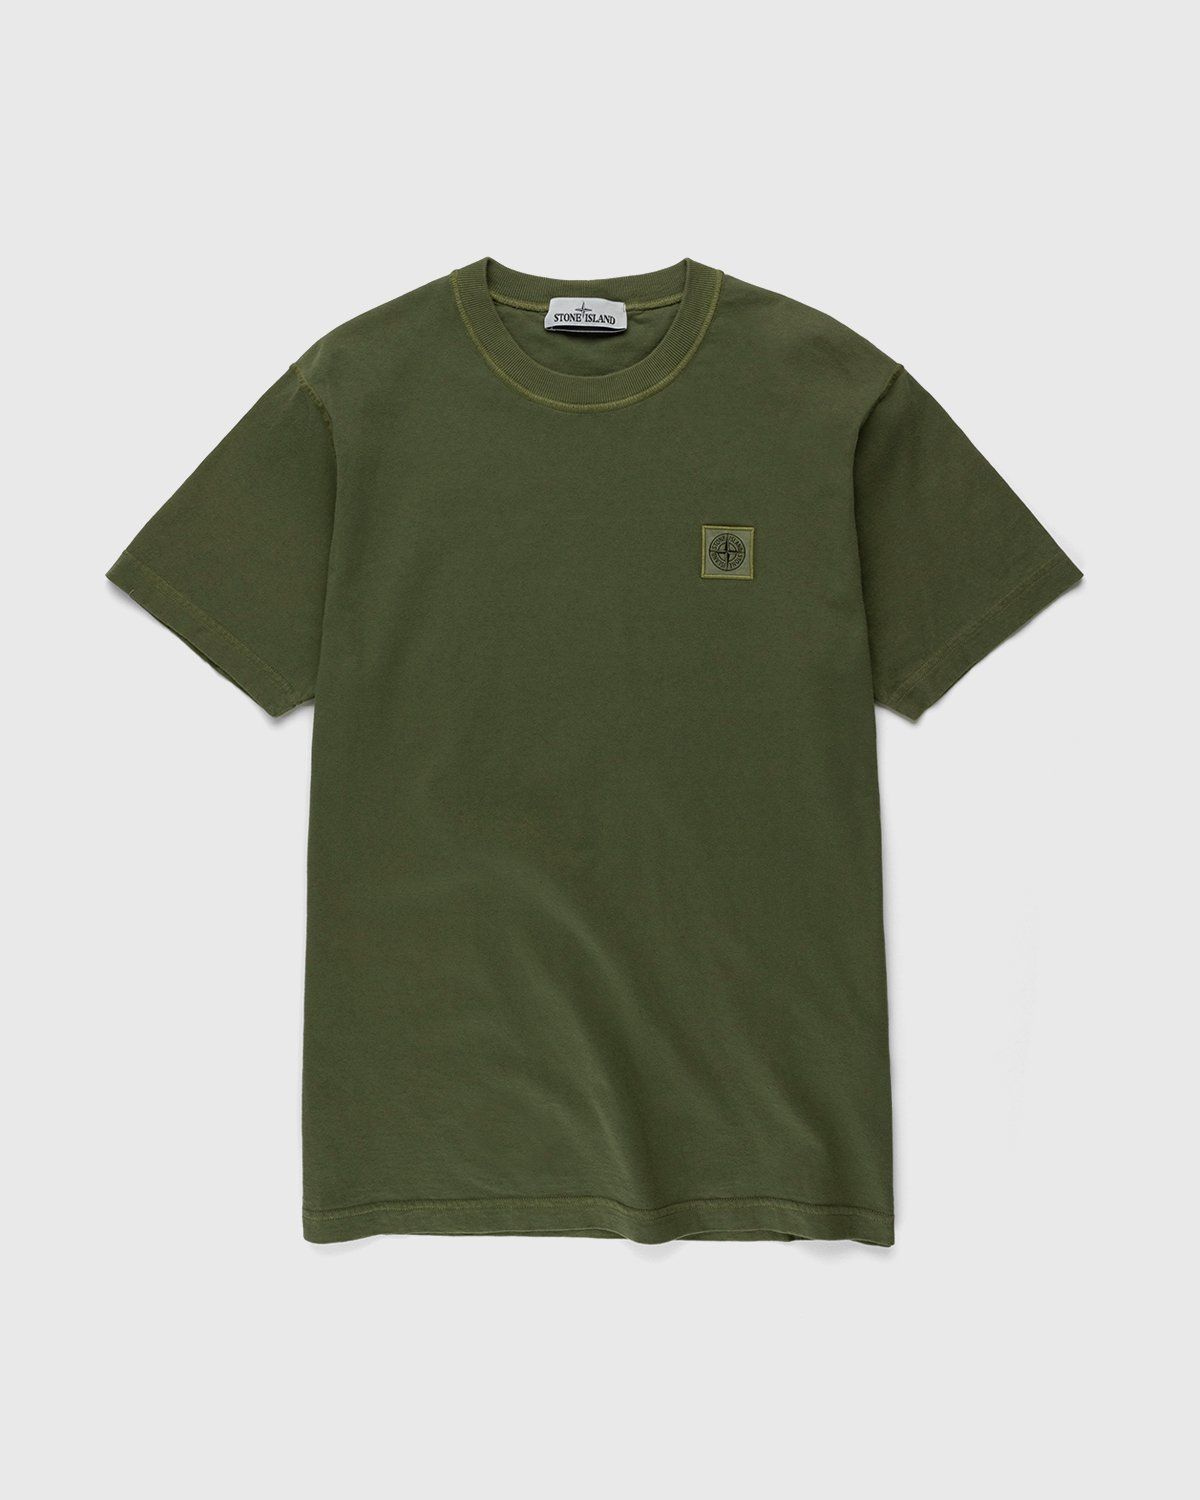 Stone Island – 23757 Garment-Dyed Fissato T-Shirt Olive Green - Image 1